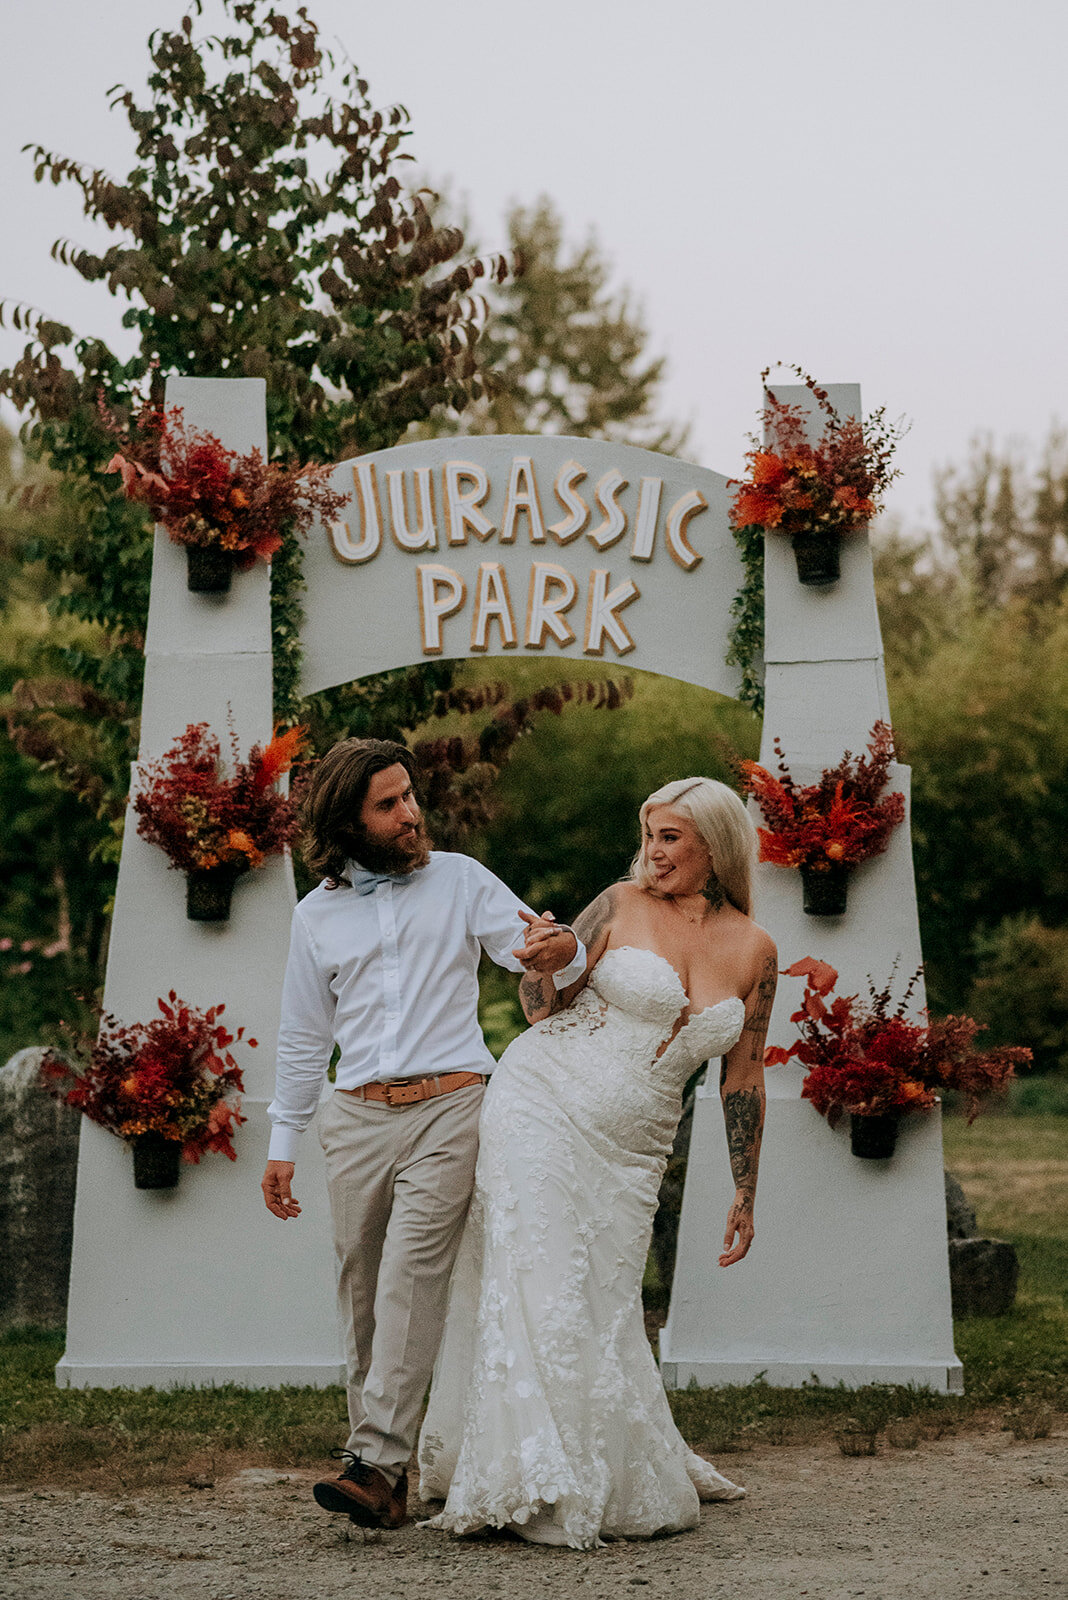 Helen and Mark bump hips below a Jurassic Park sign at their wedding at Cheekeye Ranch, Squamish